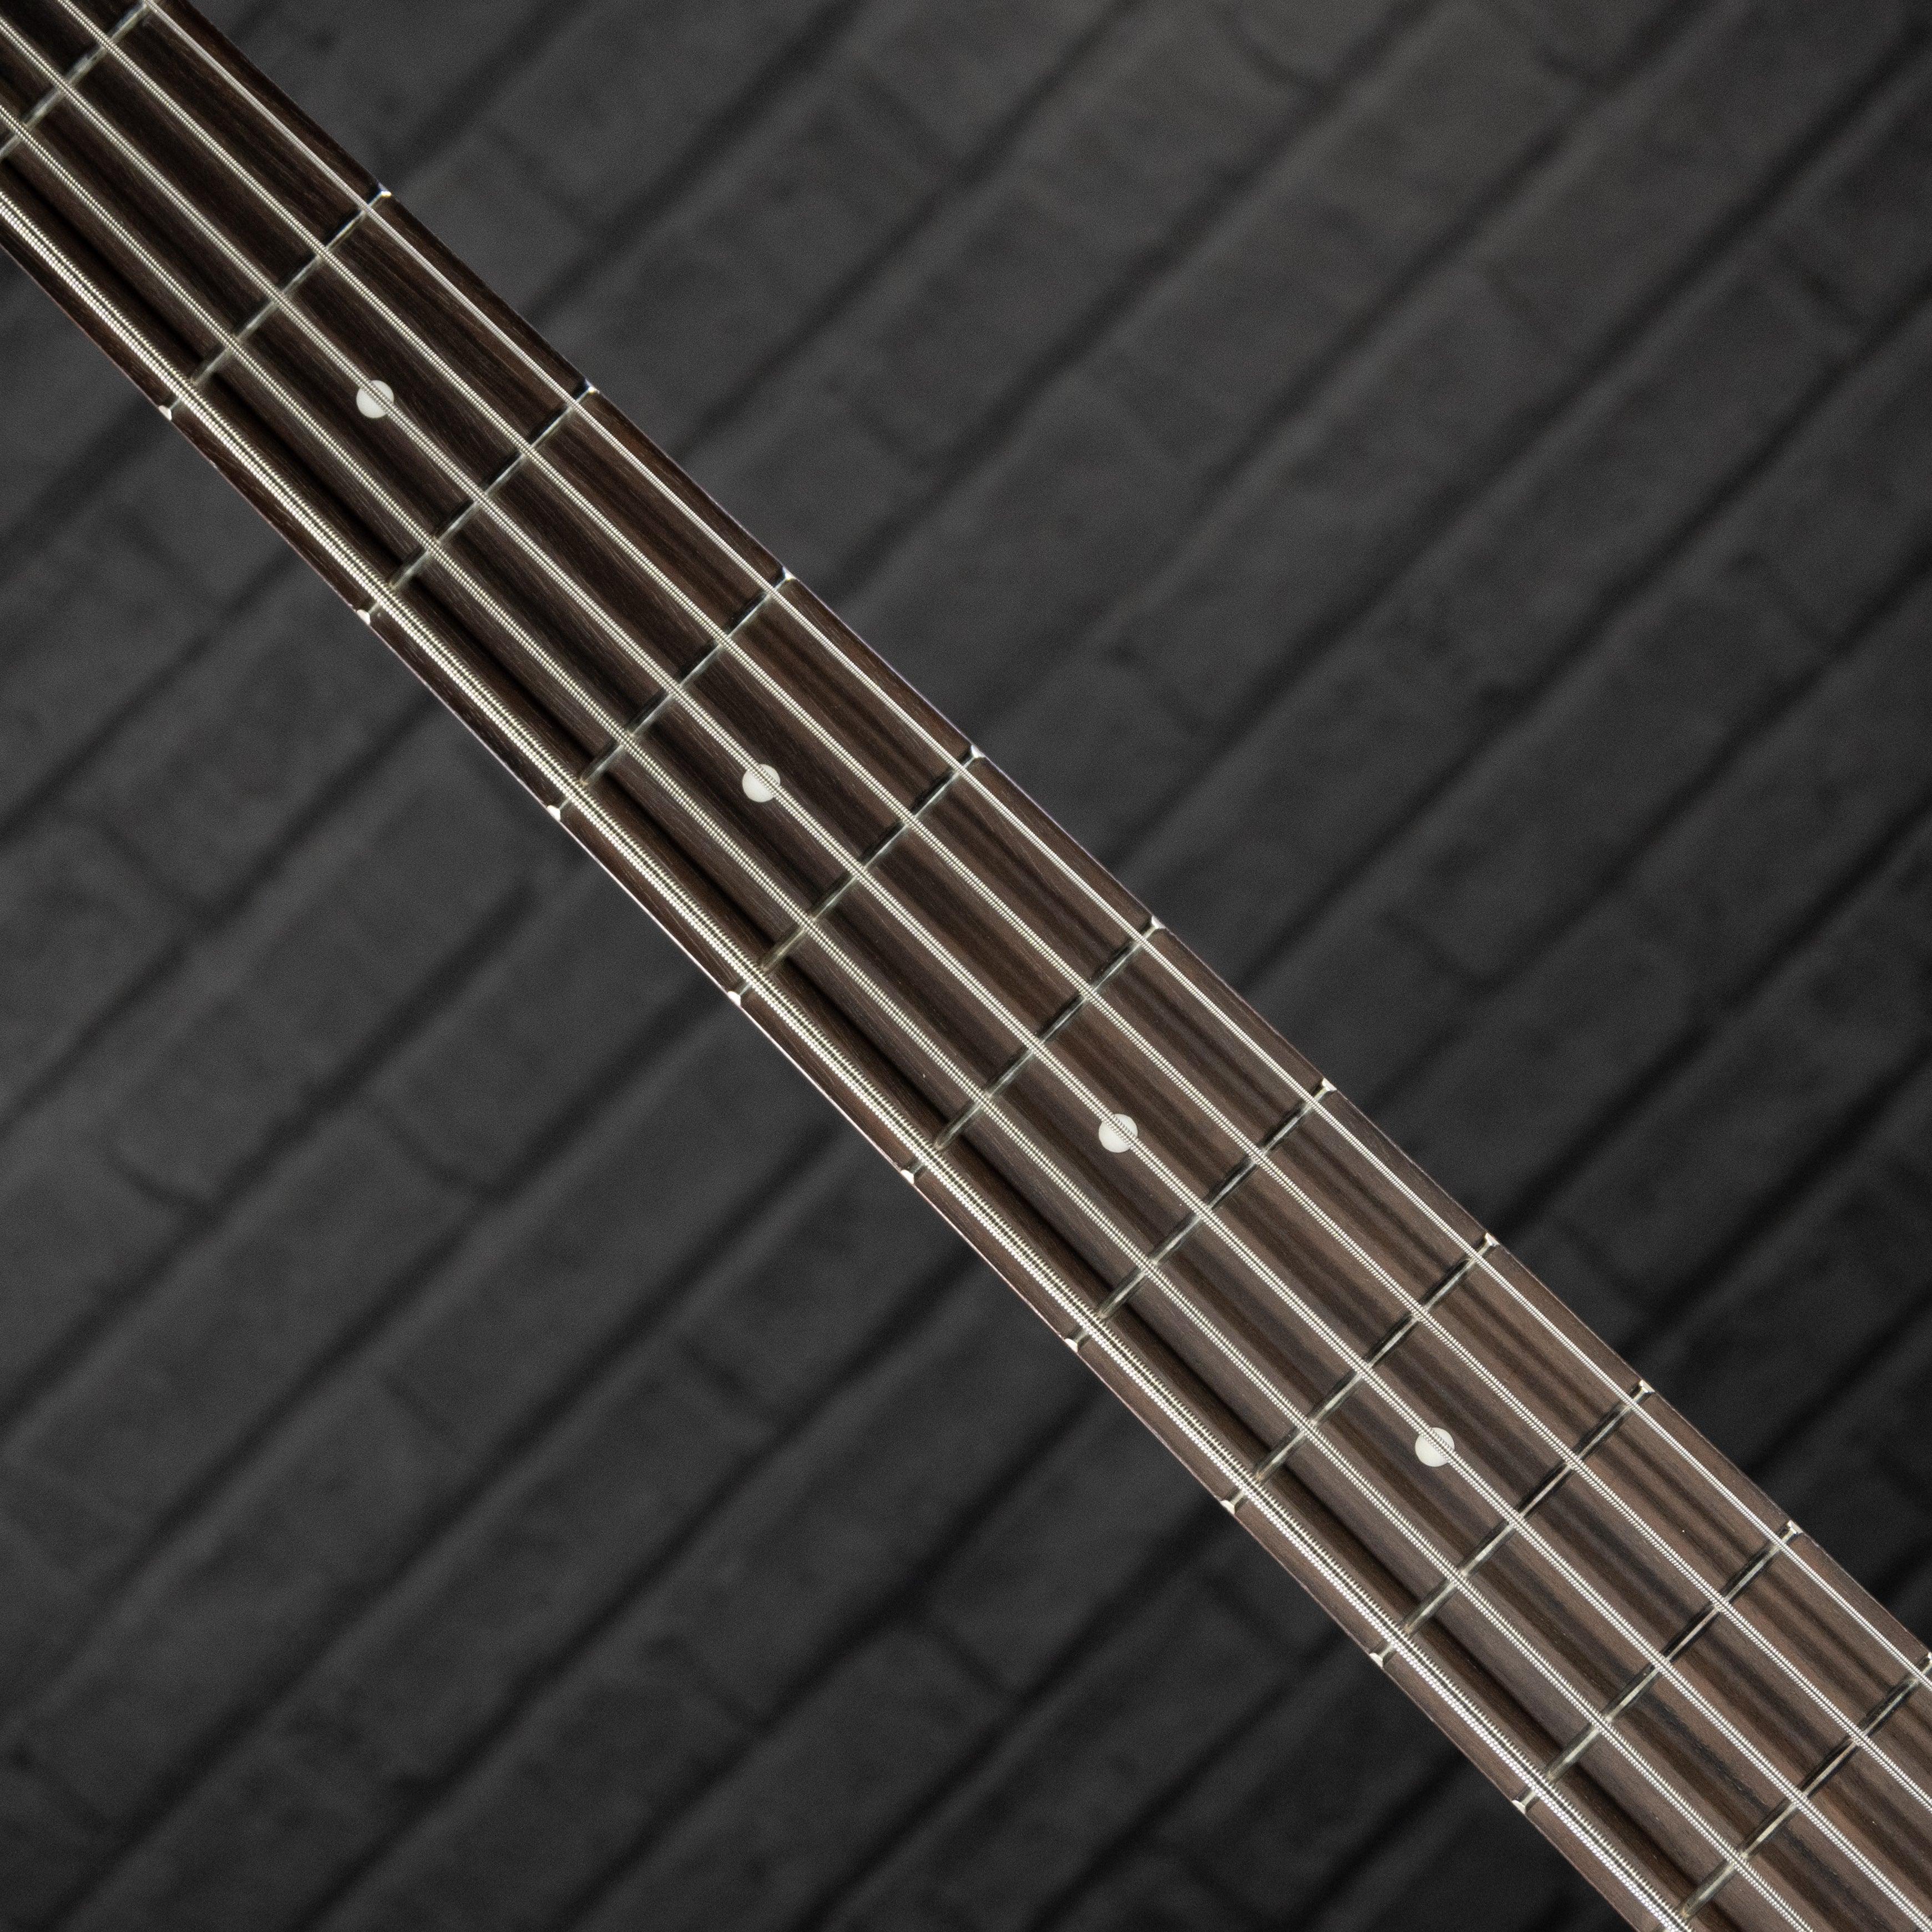 Spector Legend 5 Standard 5 String Bass Guitar (Tobacco Sunburst) - Impulse Music Co.